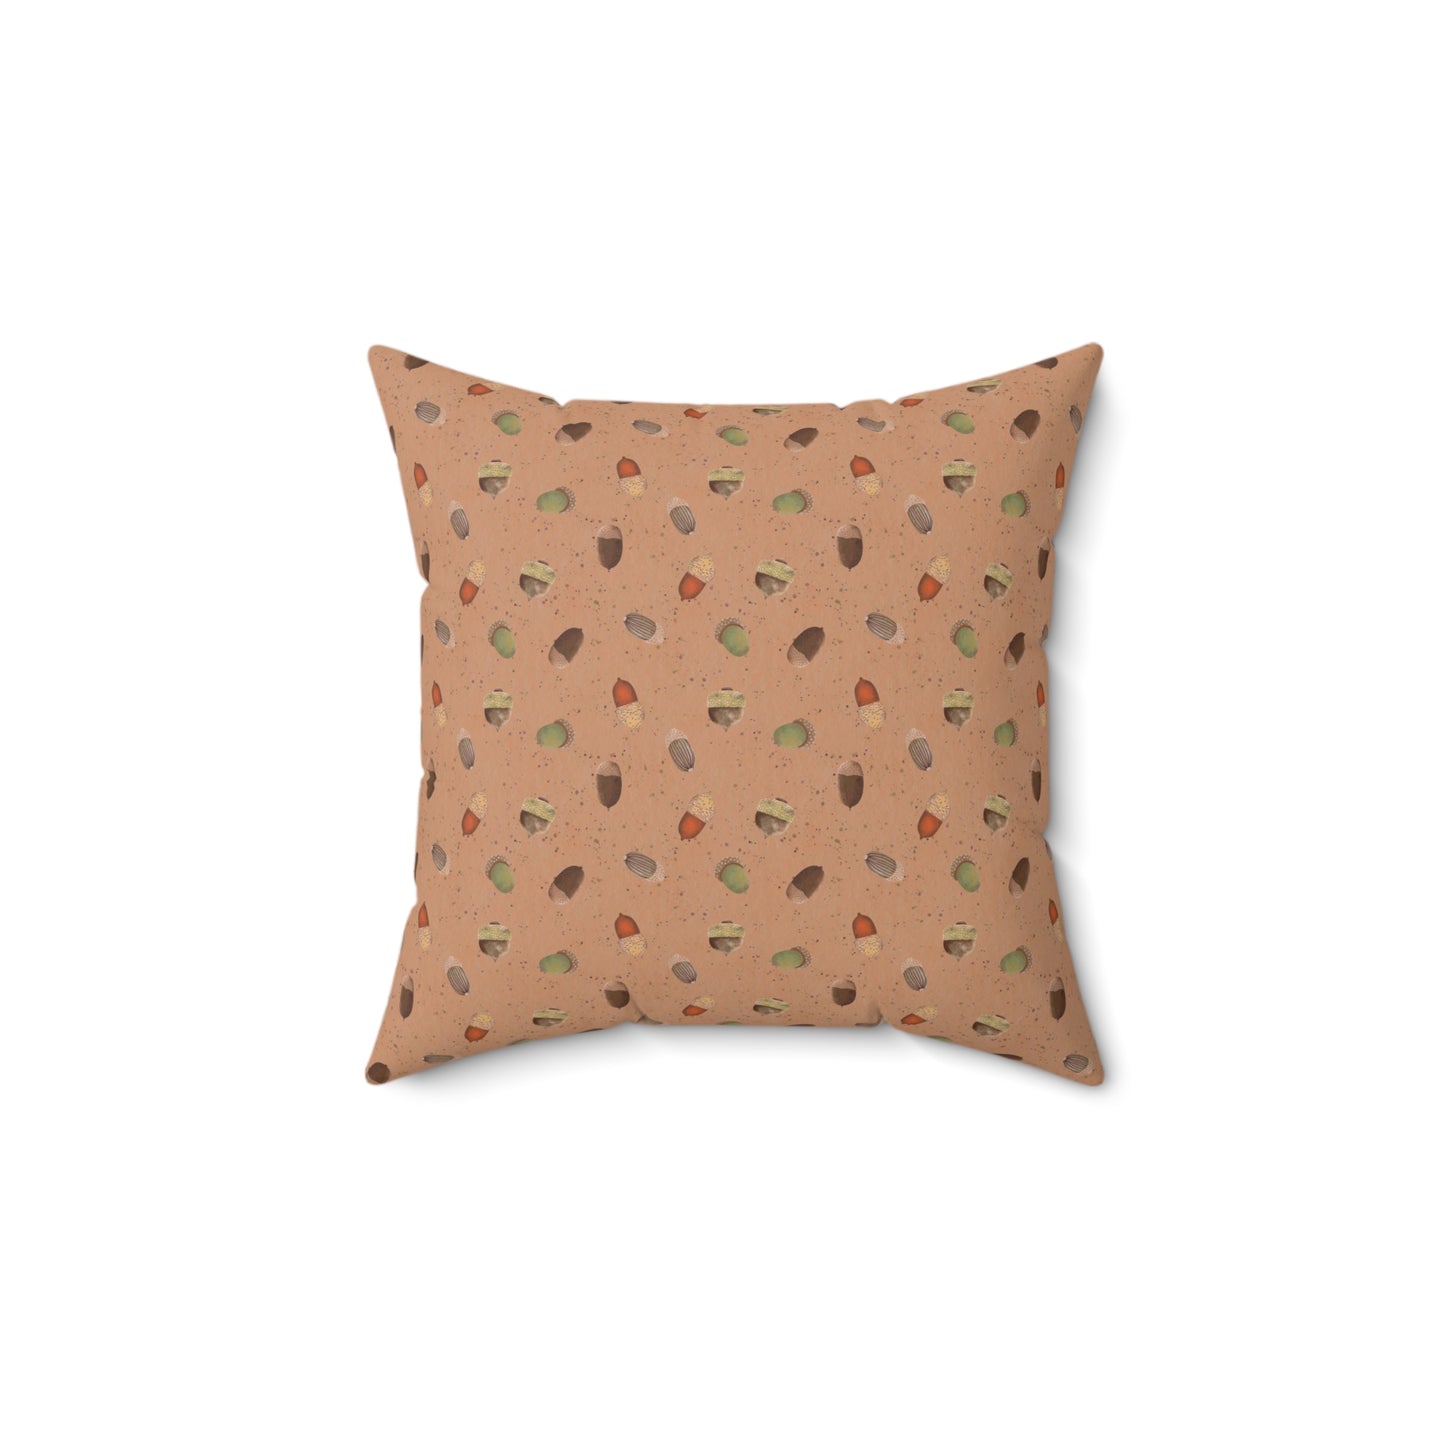 Acorns Spun Polyester Square Pillow